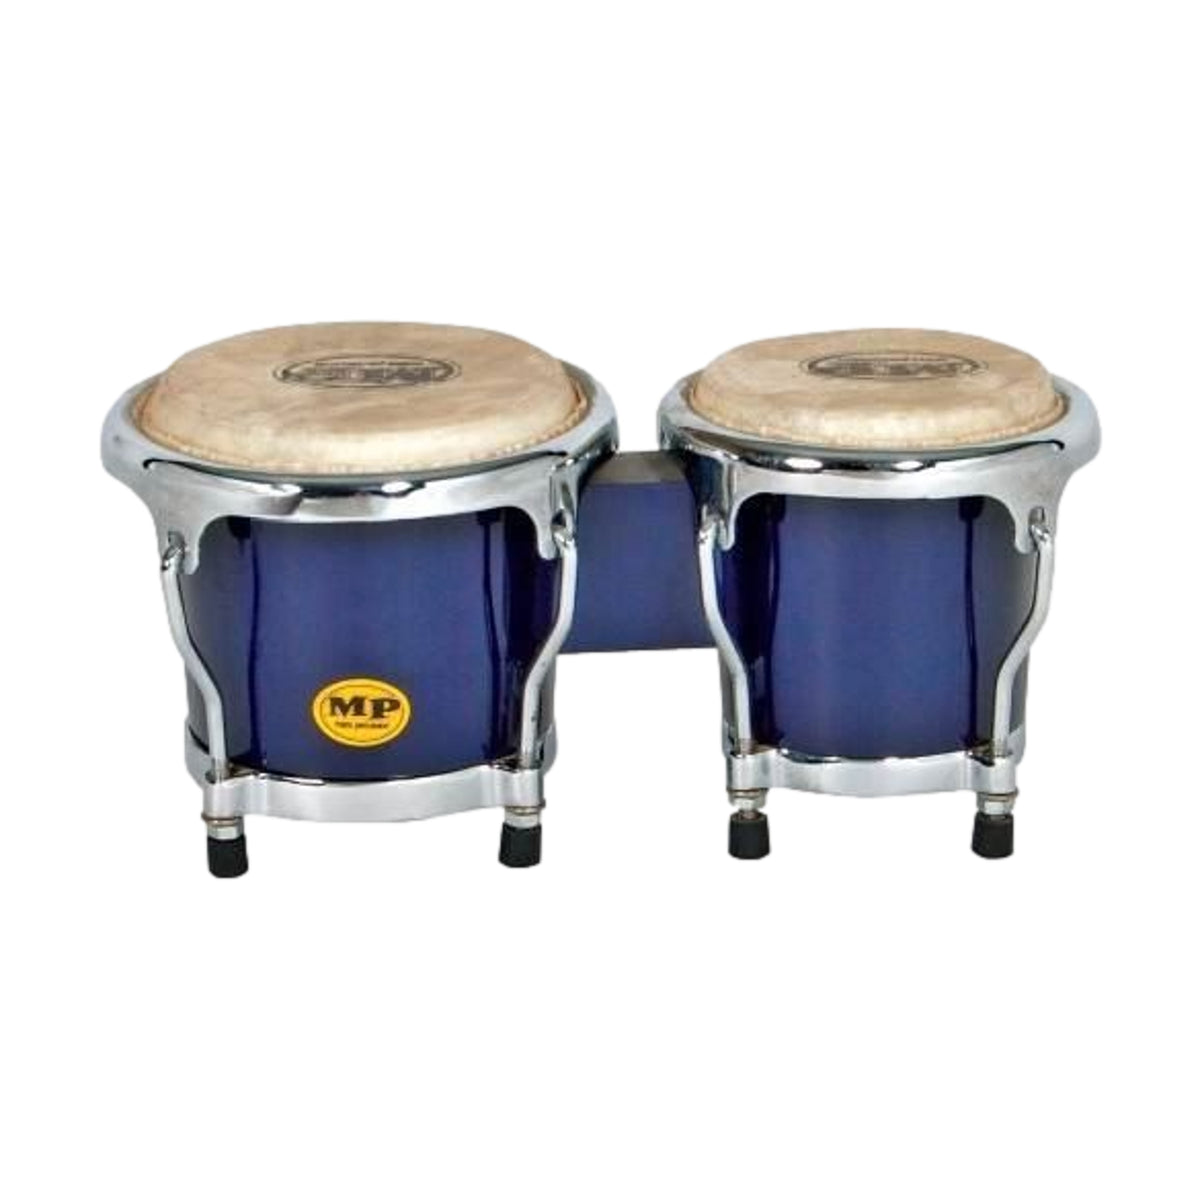 Mano Percussion Junior Tunable Bongos 4x5 Inch Blue